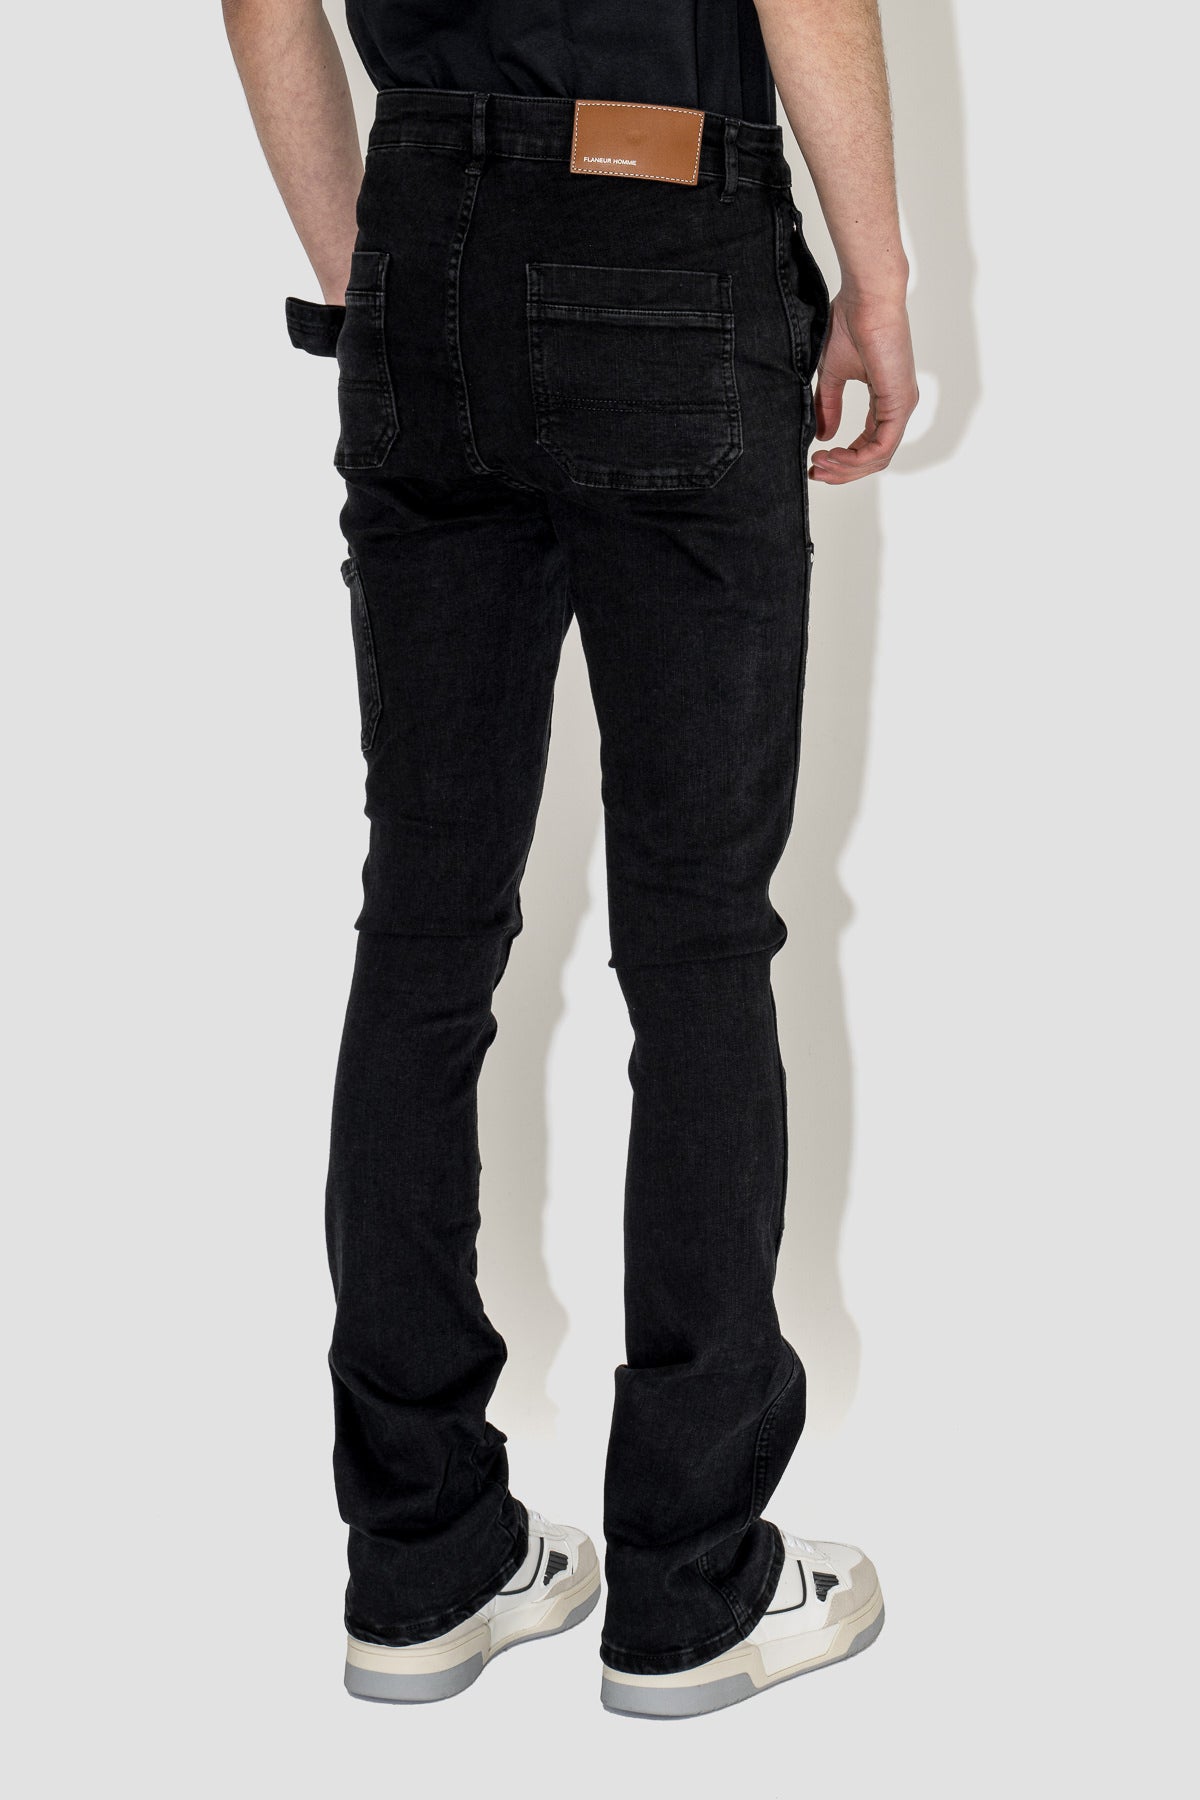 Studded Bootcut Flared Carpenter Jeans in Black Denim